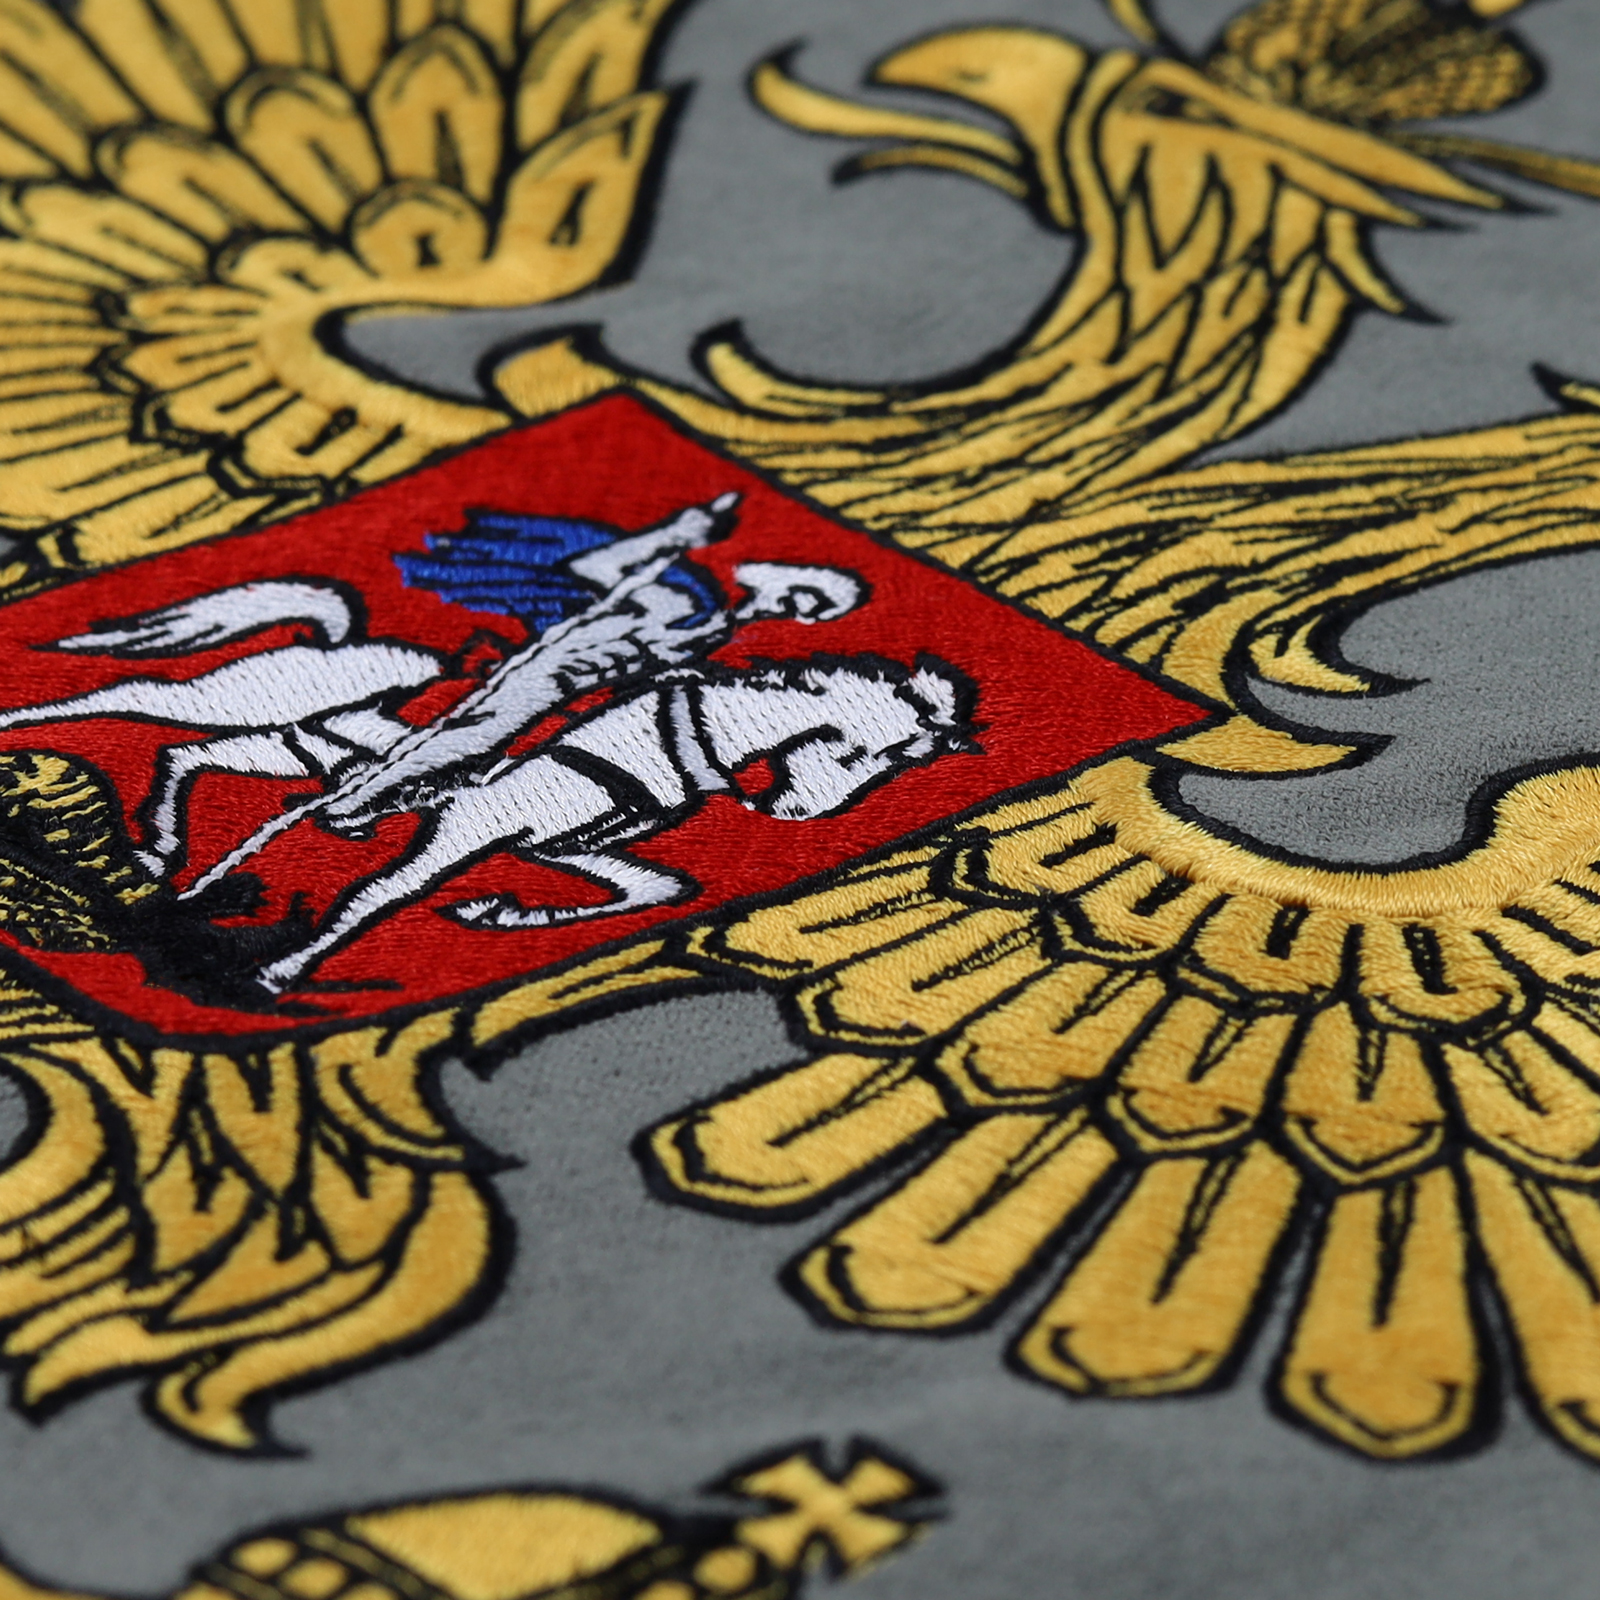 Russisches Wappen